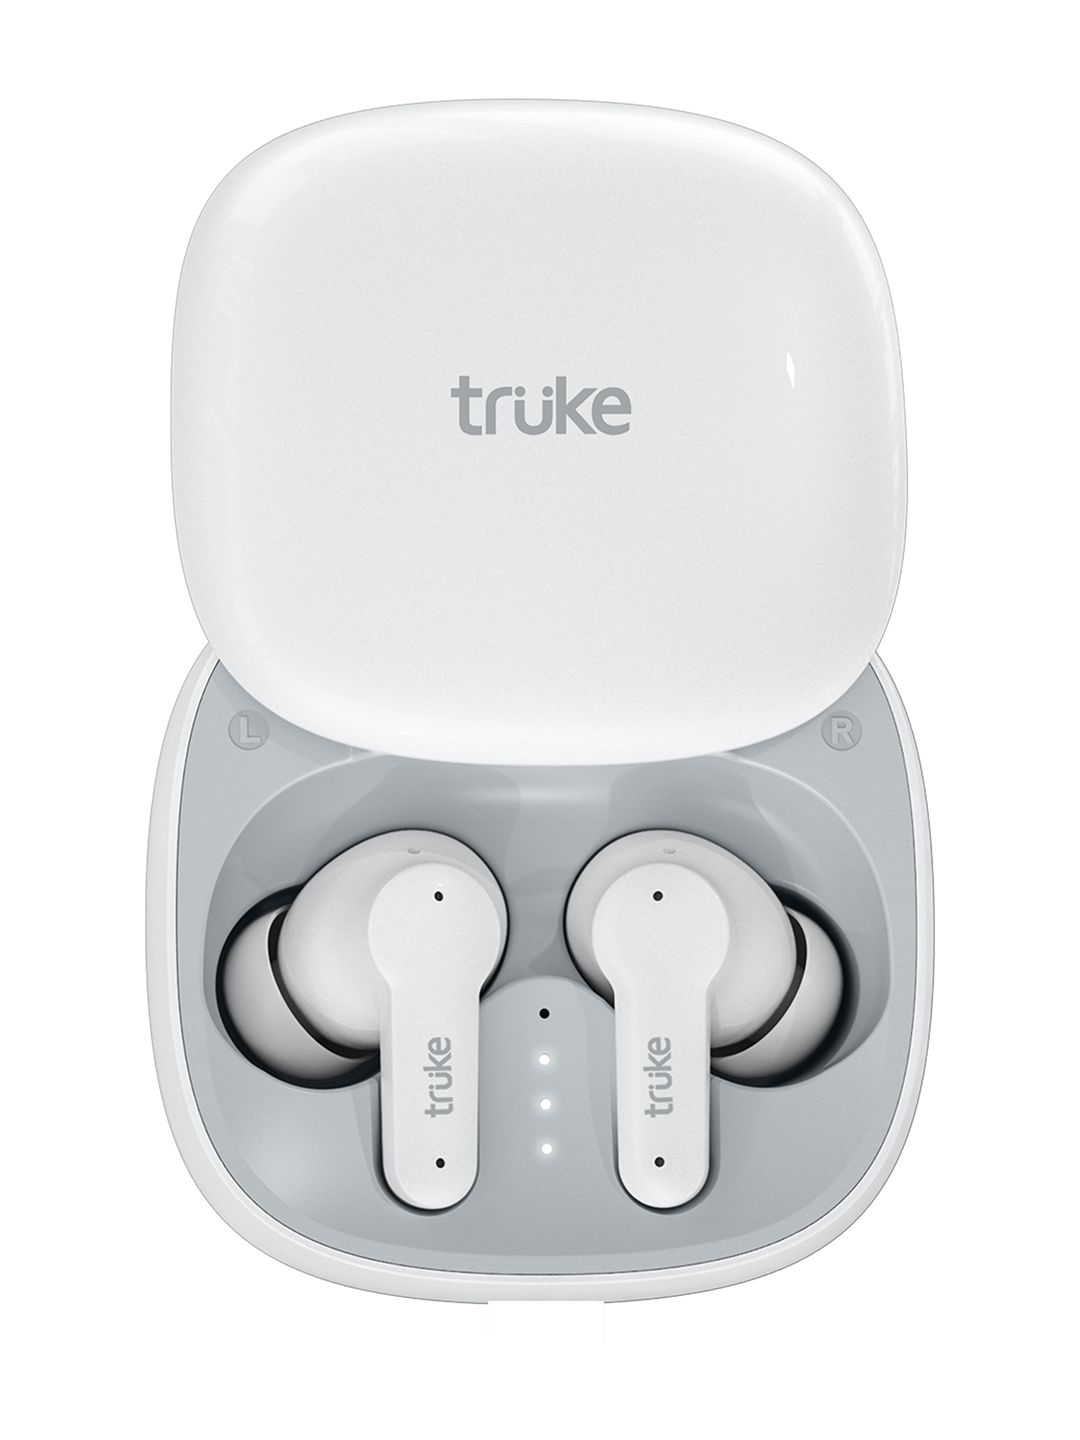 truke Buds S2 True Wireless Earbuds - White Price in India